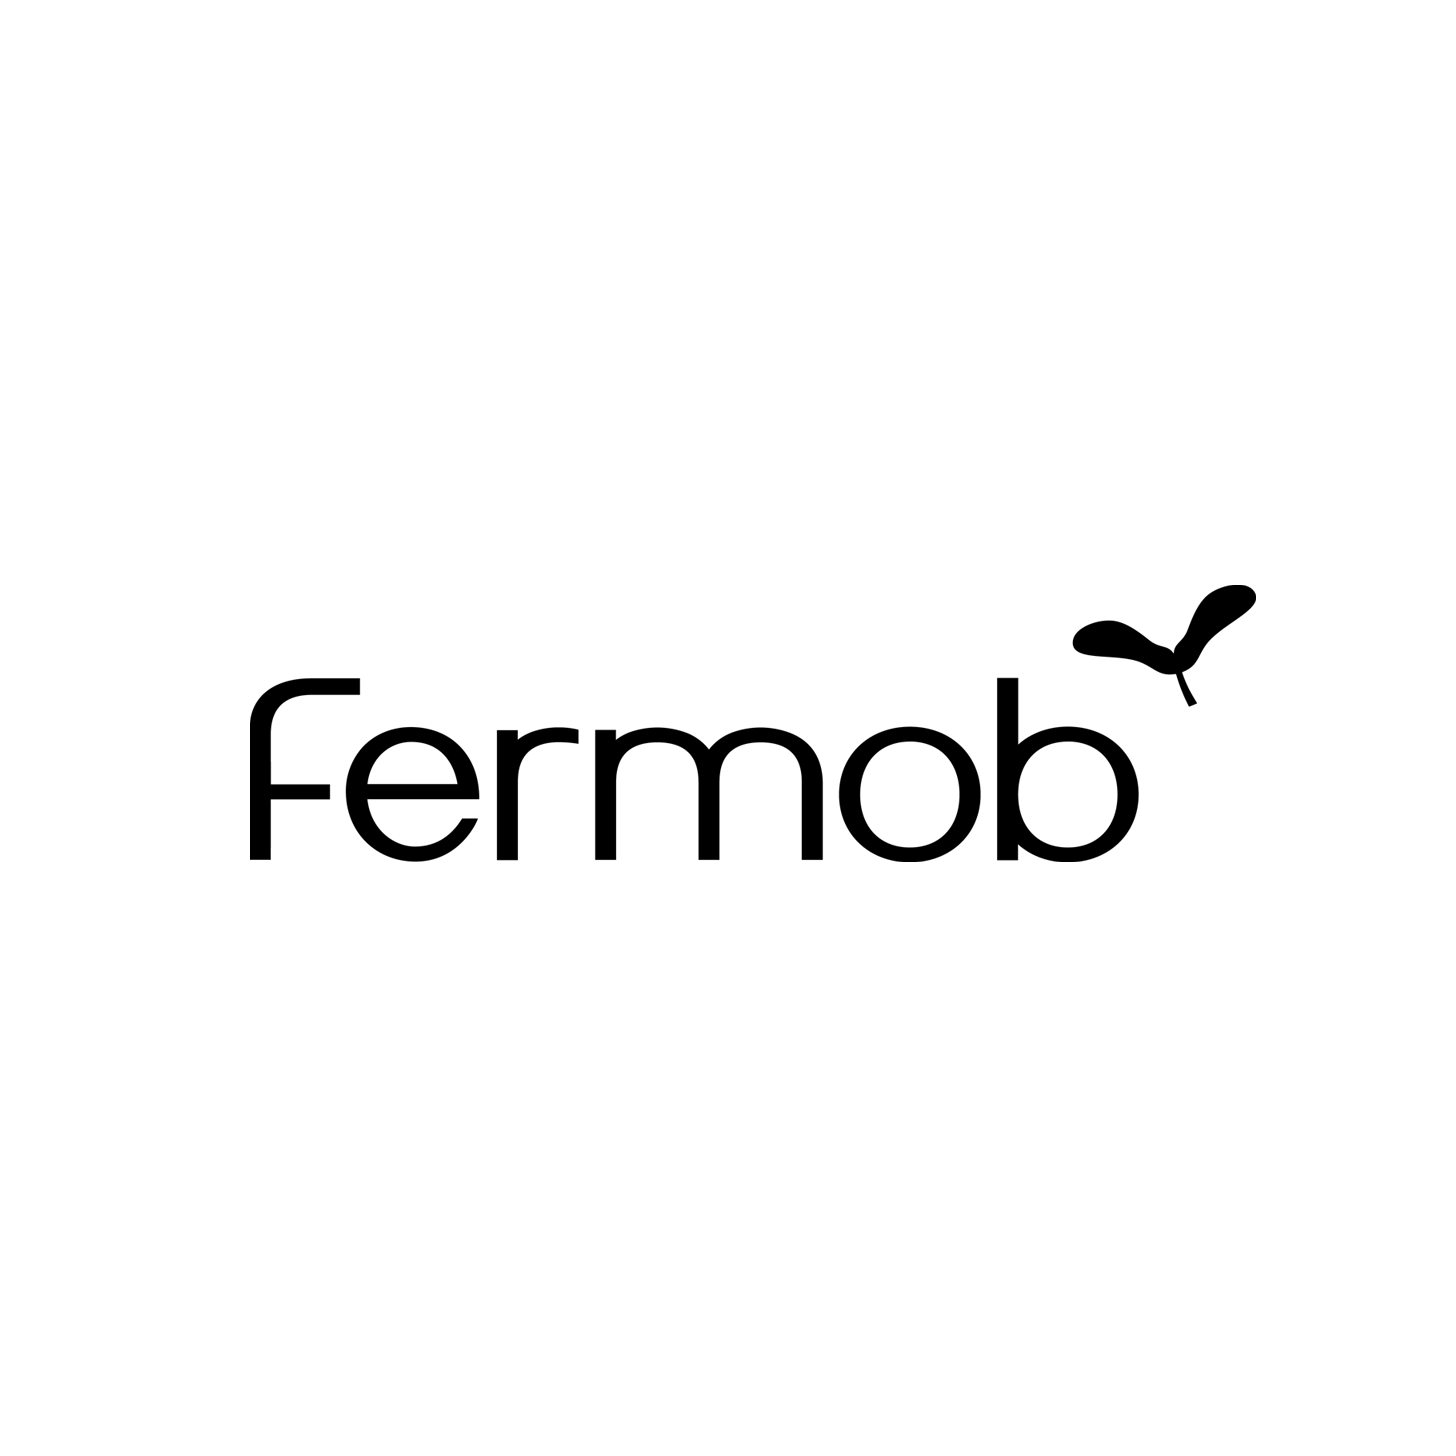 Fermob